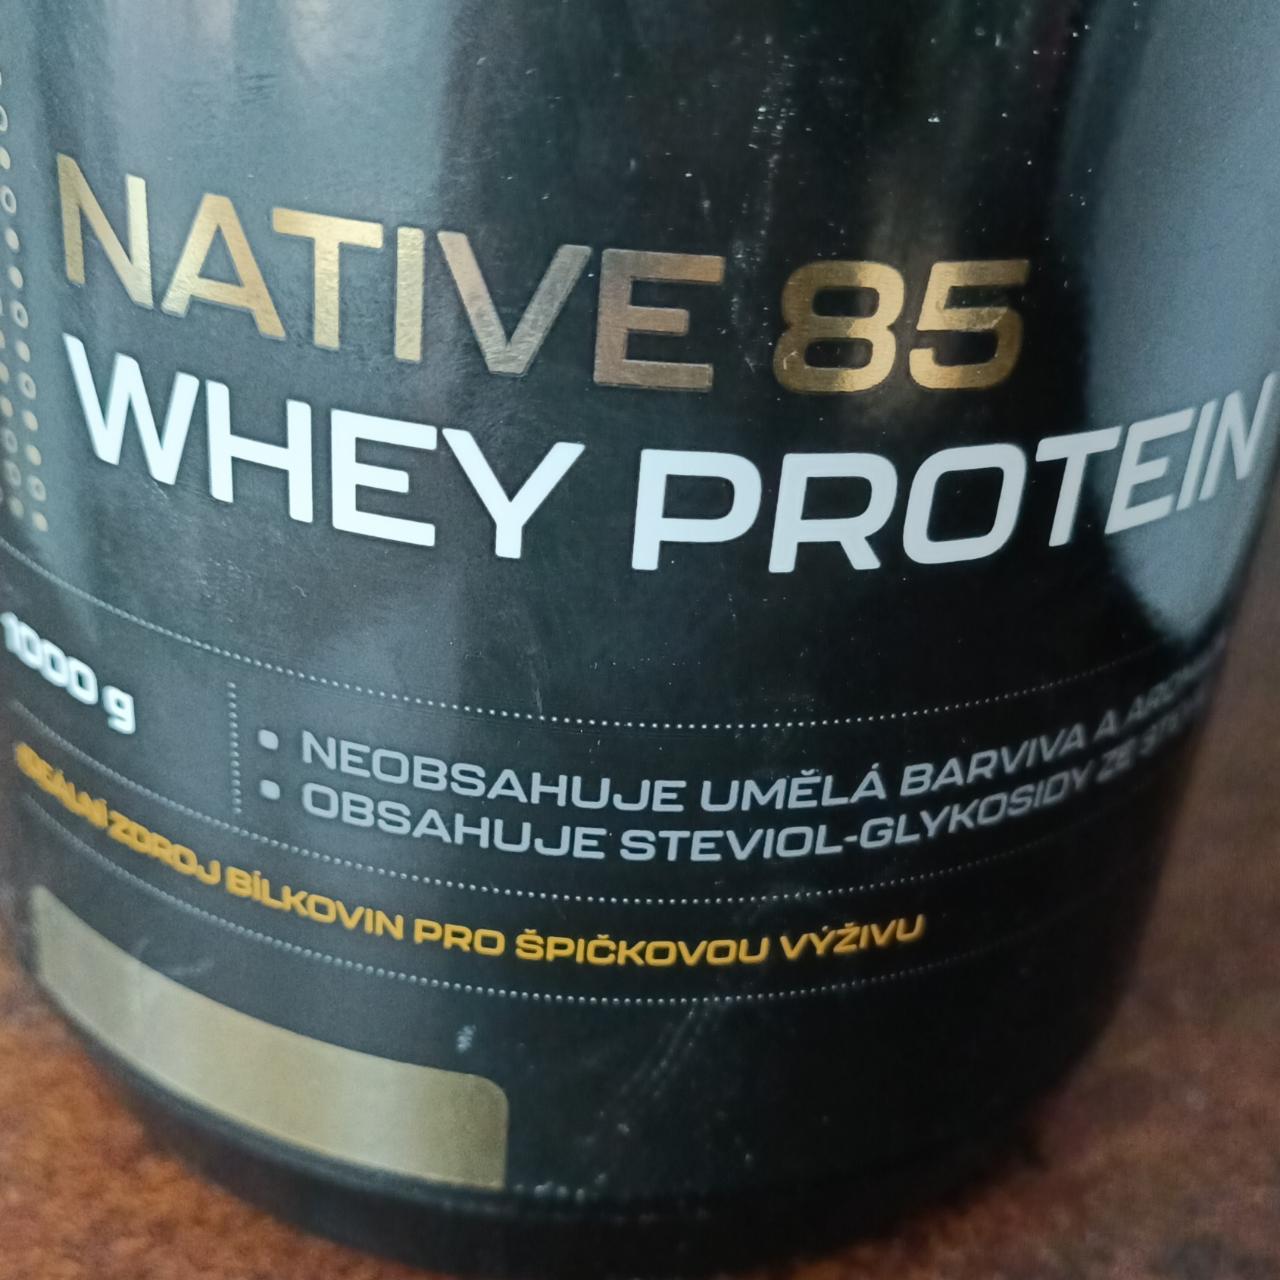 Fotografie - Native 85 Whey Protein jahoda ATP Nutrition